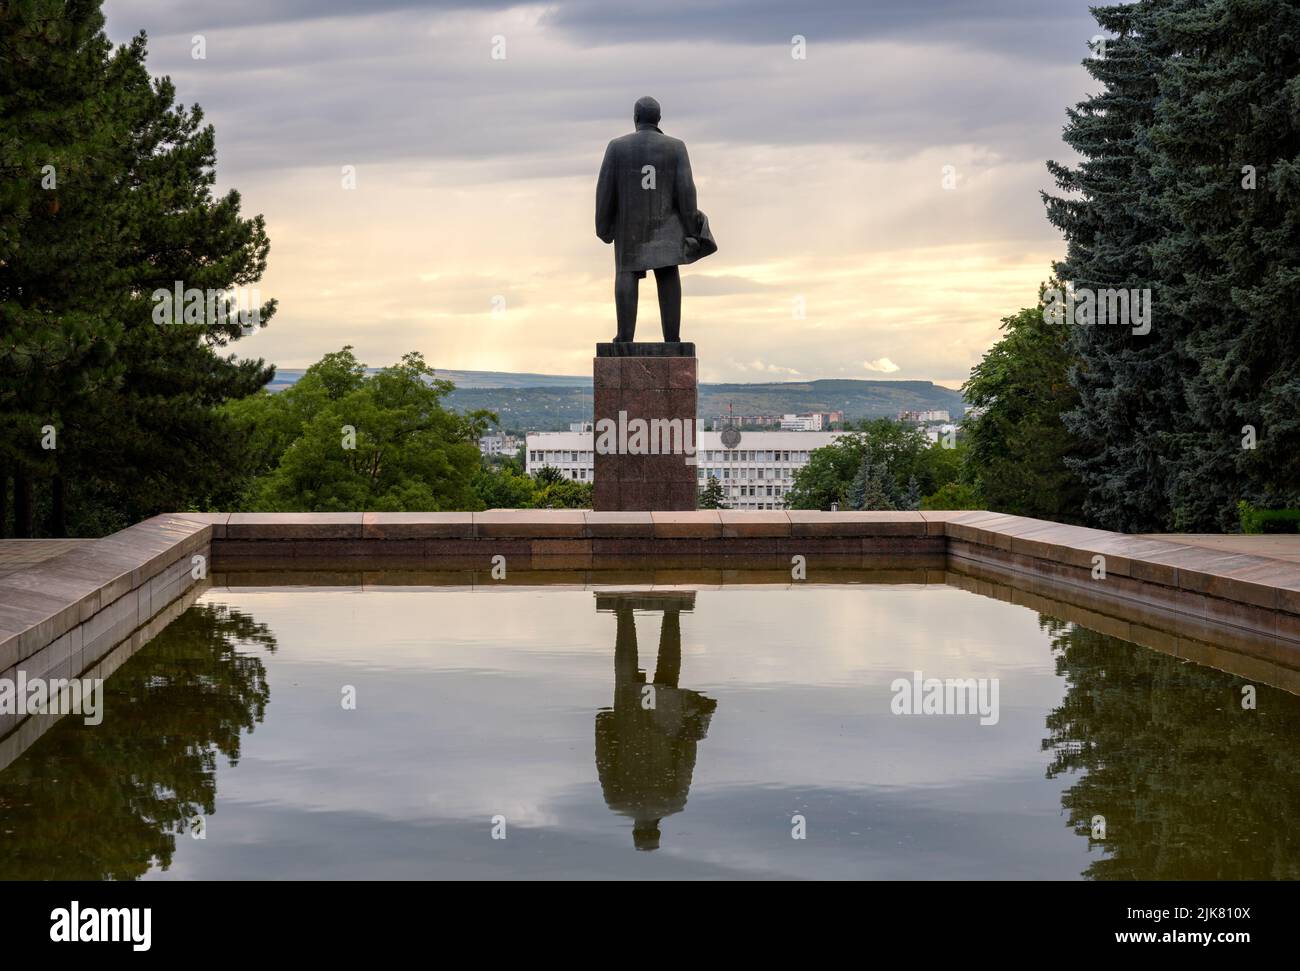 Monument to Lenin at sunset, Pyatigorsk, Stavropol Krai, Russia. Scenery of old big statue, historical landmark of Pyatigorsk city installed in 1971. Stock Photo